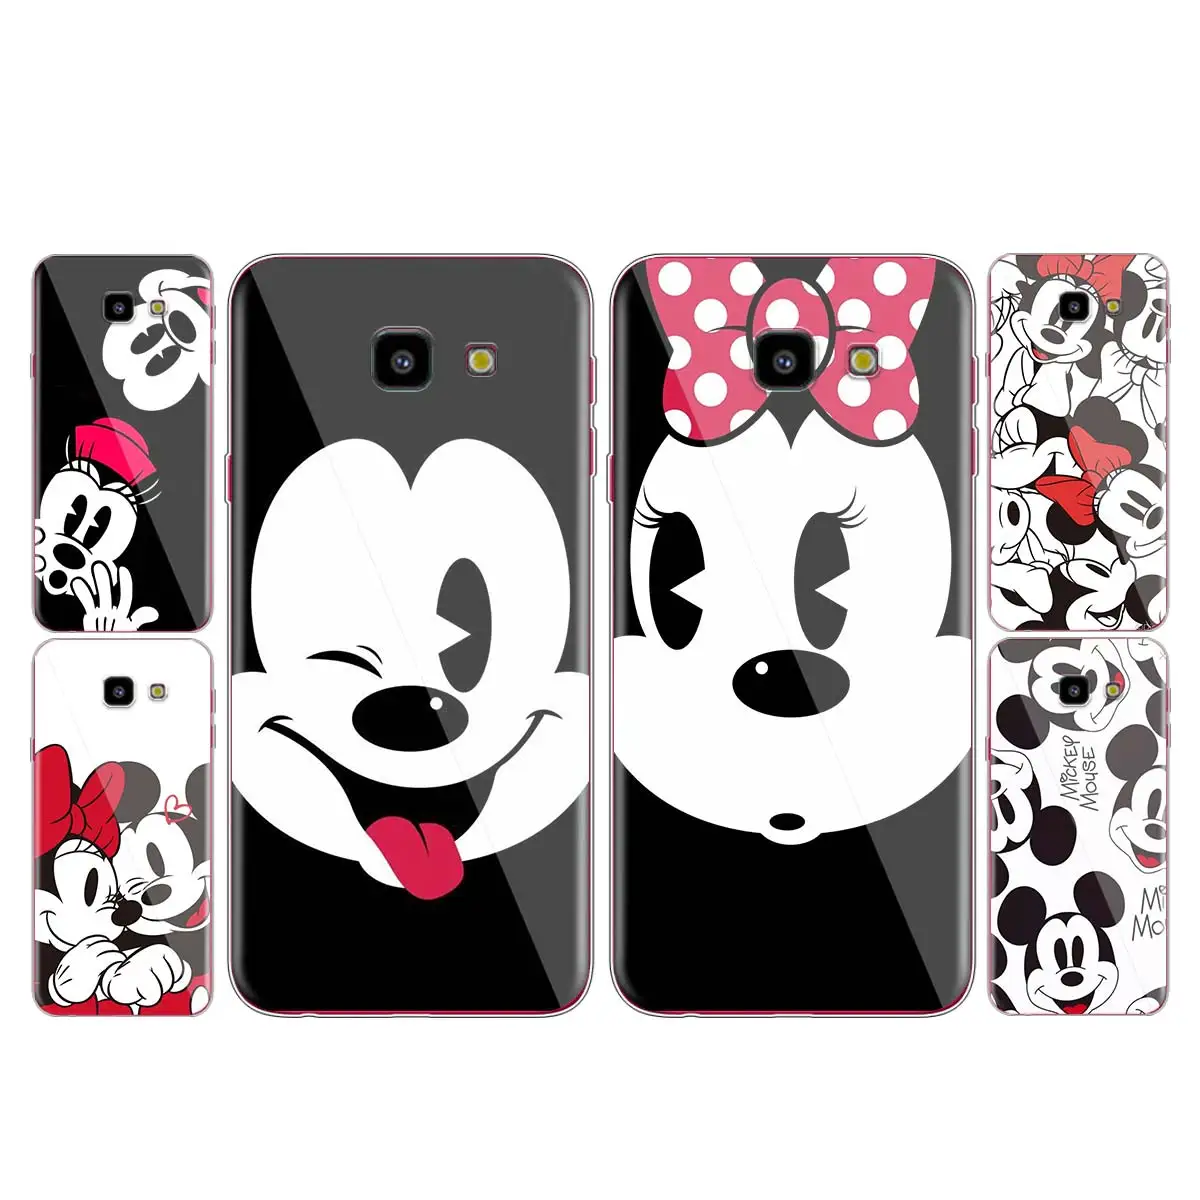 

Disney Mickey Minnie Black for Samsung Galaxy J2 J3 J4 Core J5 J6 J7 J8 Prime duo Plus 2018 2017 Soft Transparent Phone Cover